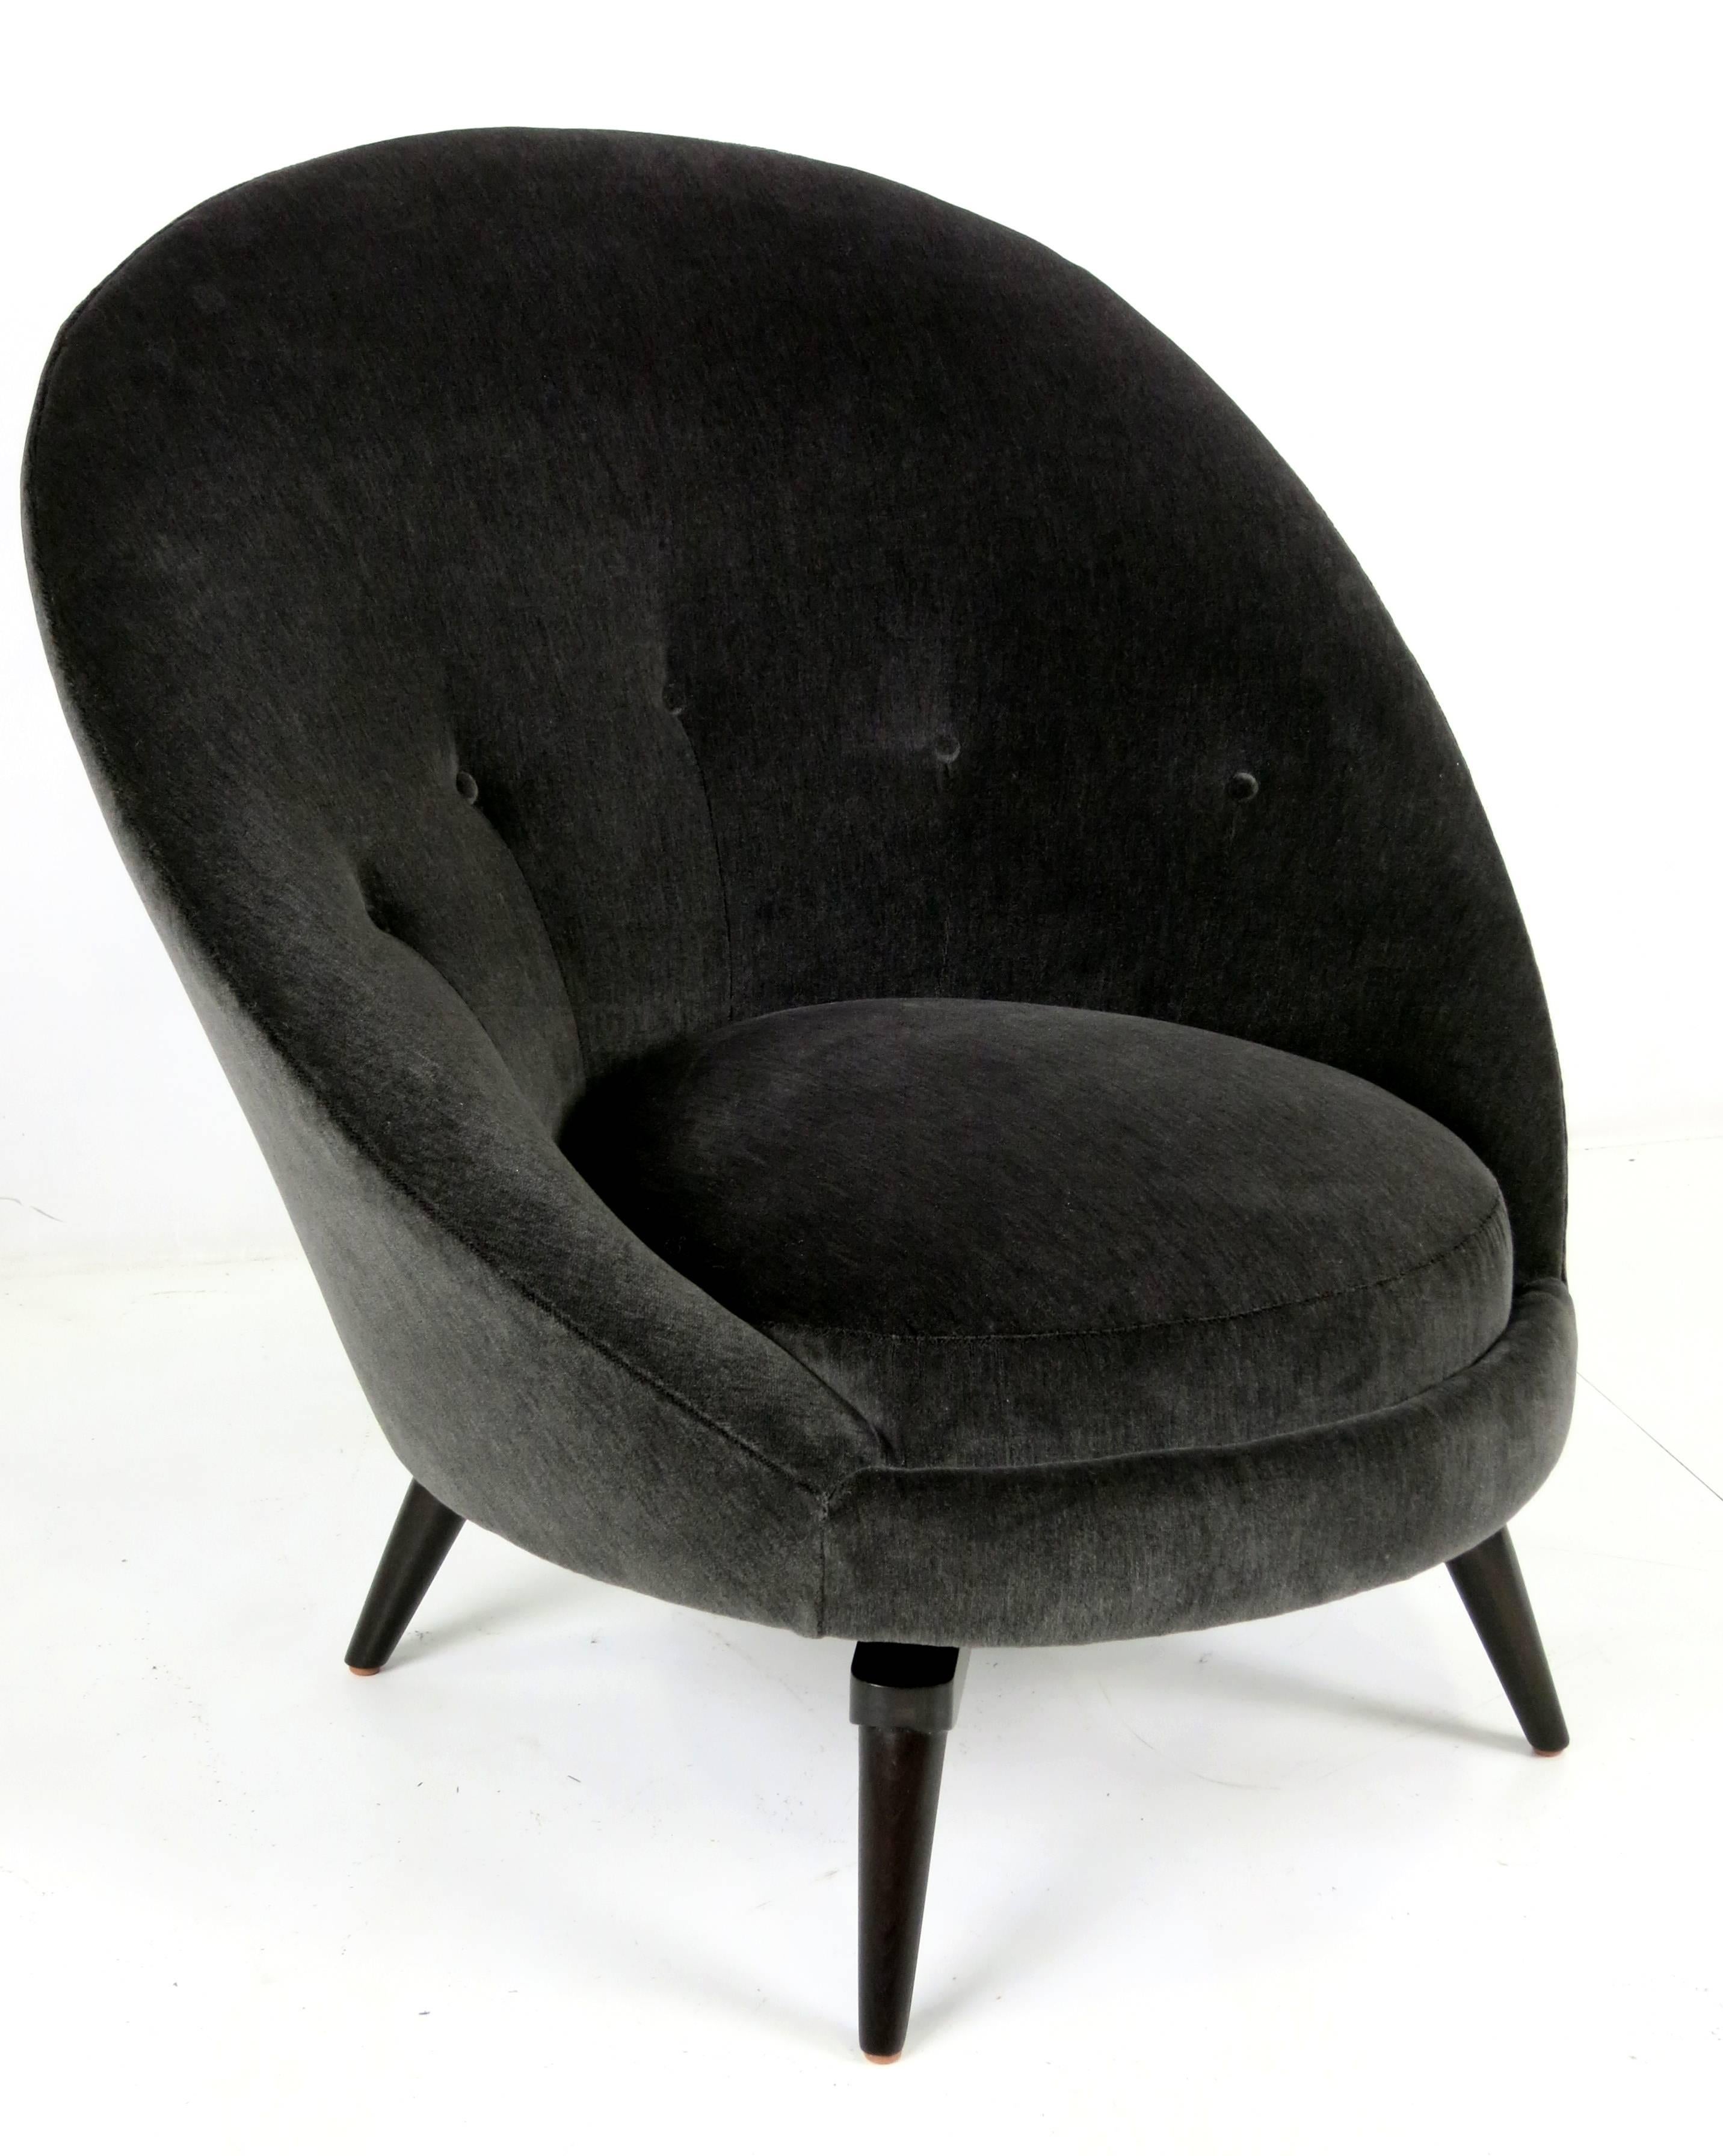 retro-inspired egg chair -china -b2b -forum -blog -wikipedia -.cn -.gov -alibaba